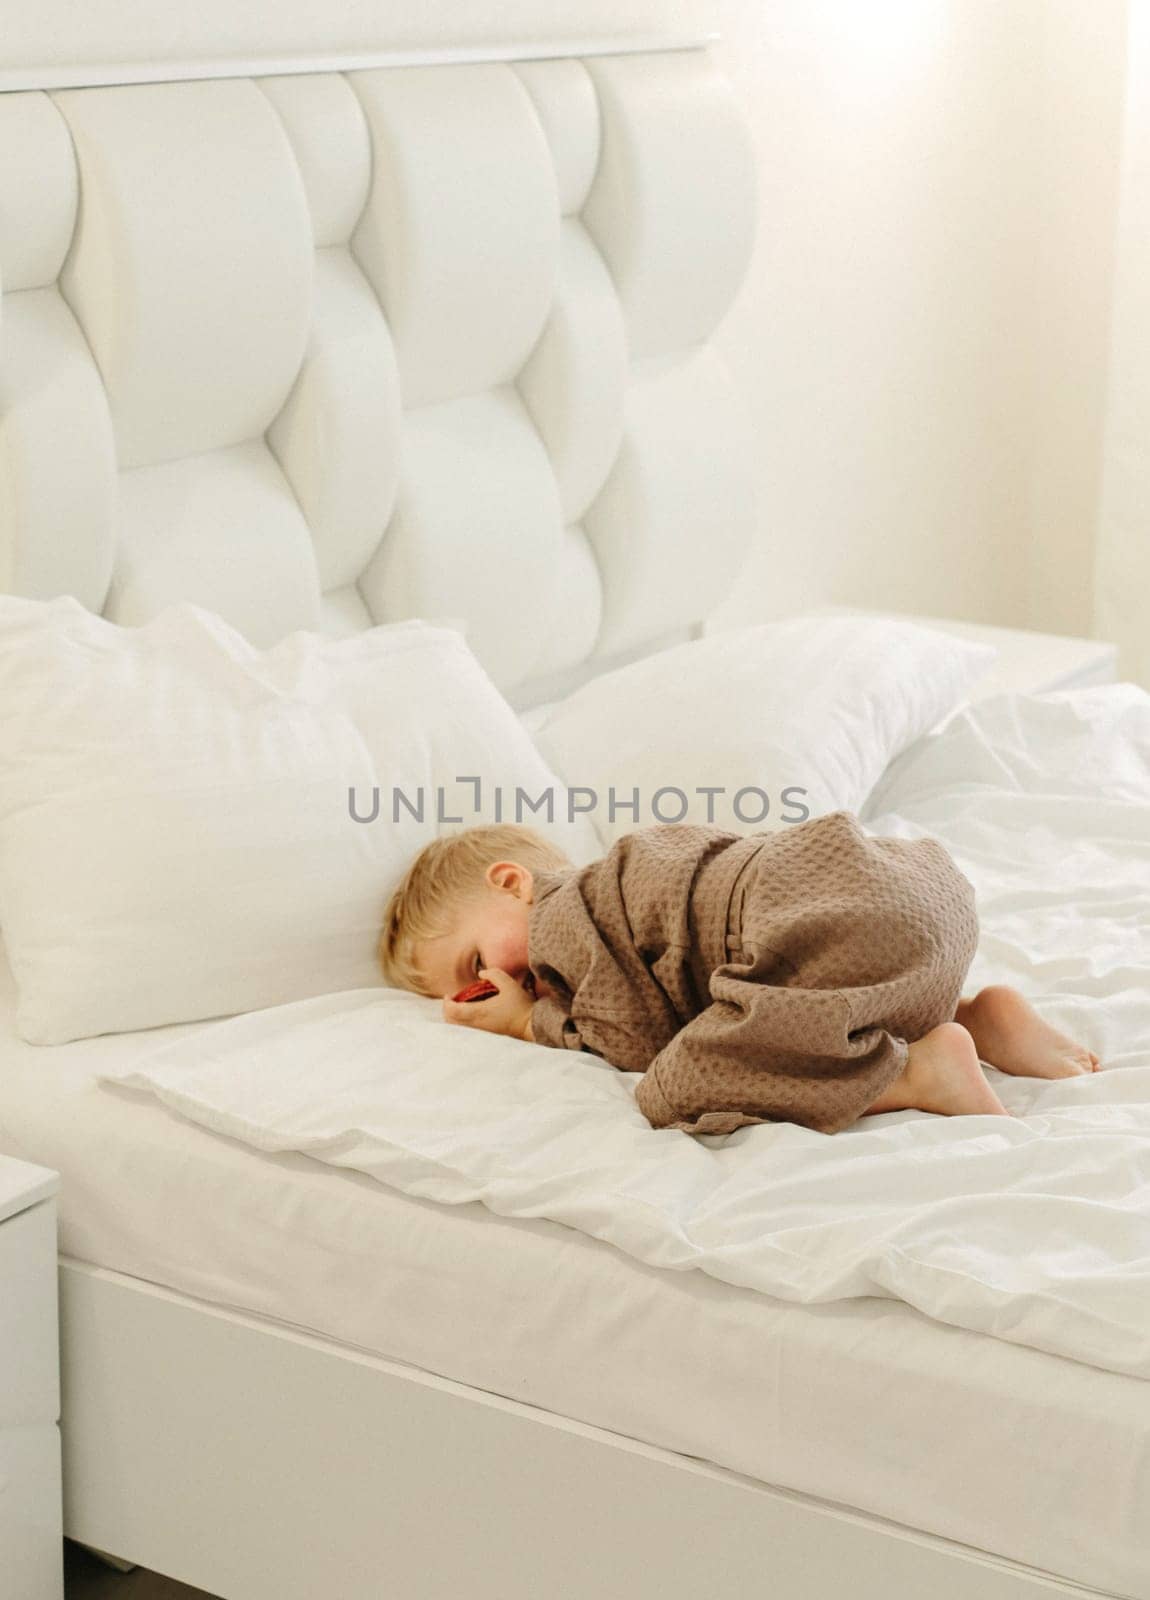 A boy in a brown bathrobe lies on a white bed, peeping through his hands. Vertical frame.